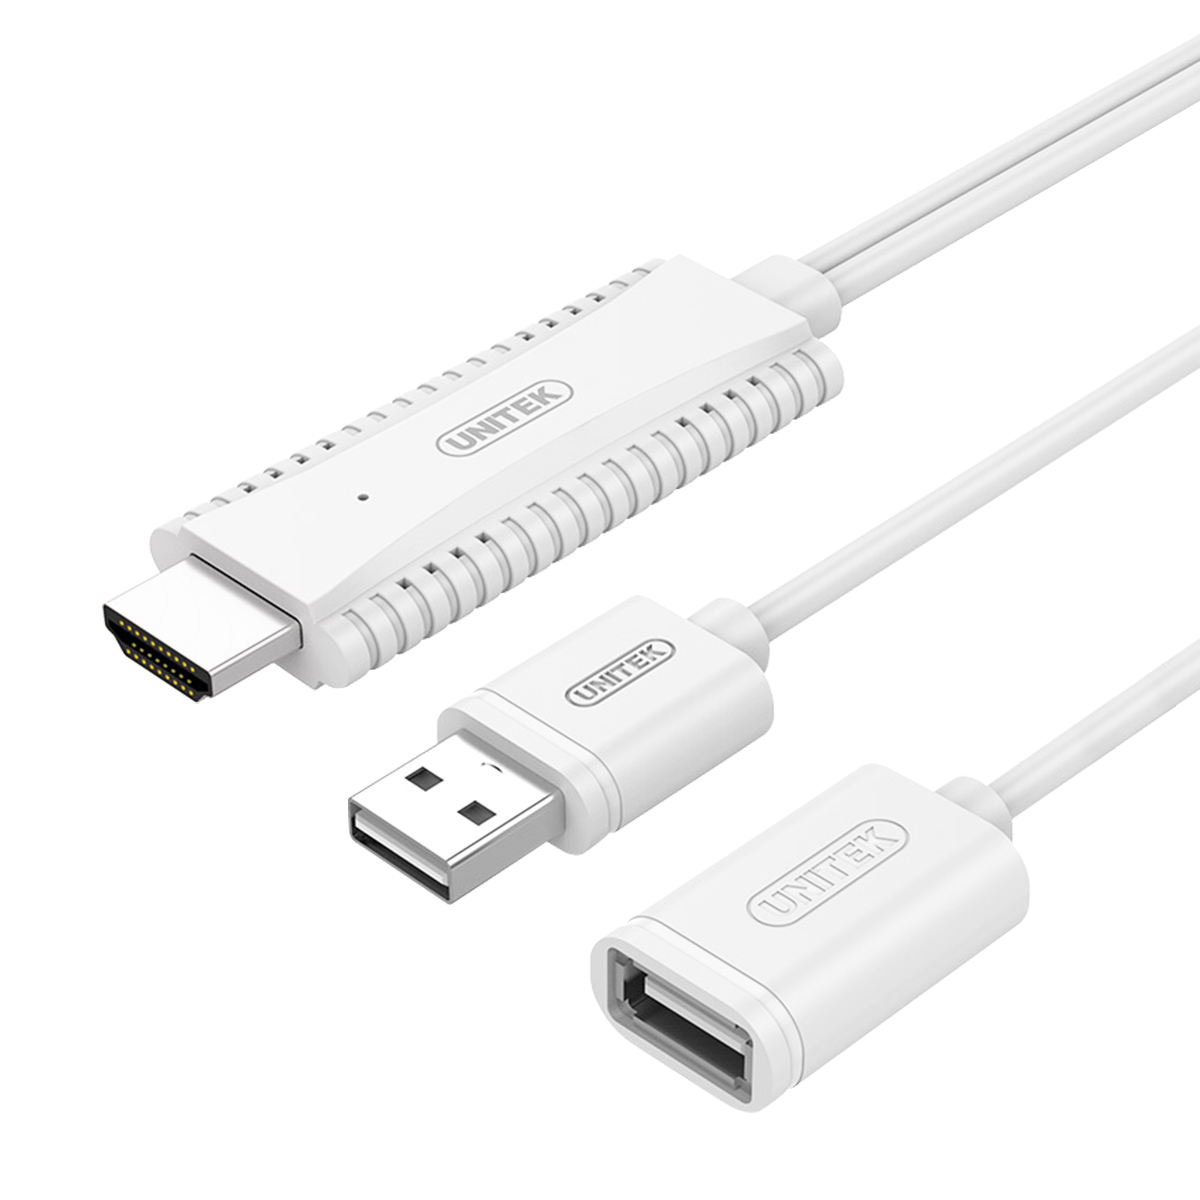 Commo usb c. Кабель USB-C/Lightning адаптер. Переходник Bluelounge Jimi USB - USB. Сетевой адаптер USB-A. USB C HDMI кабель.